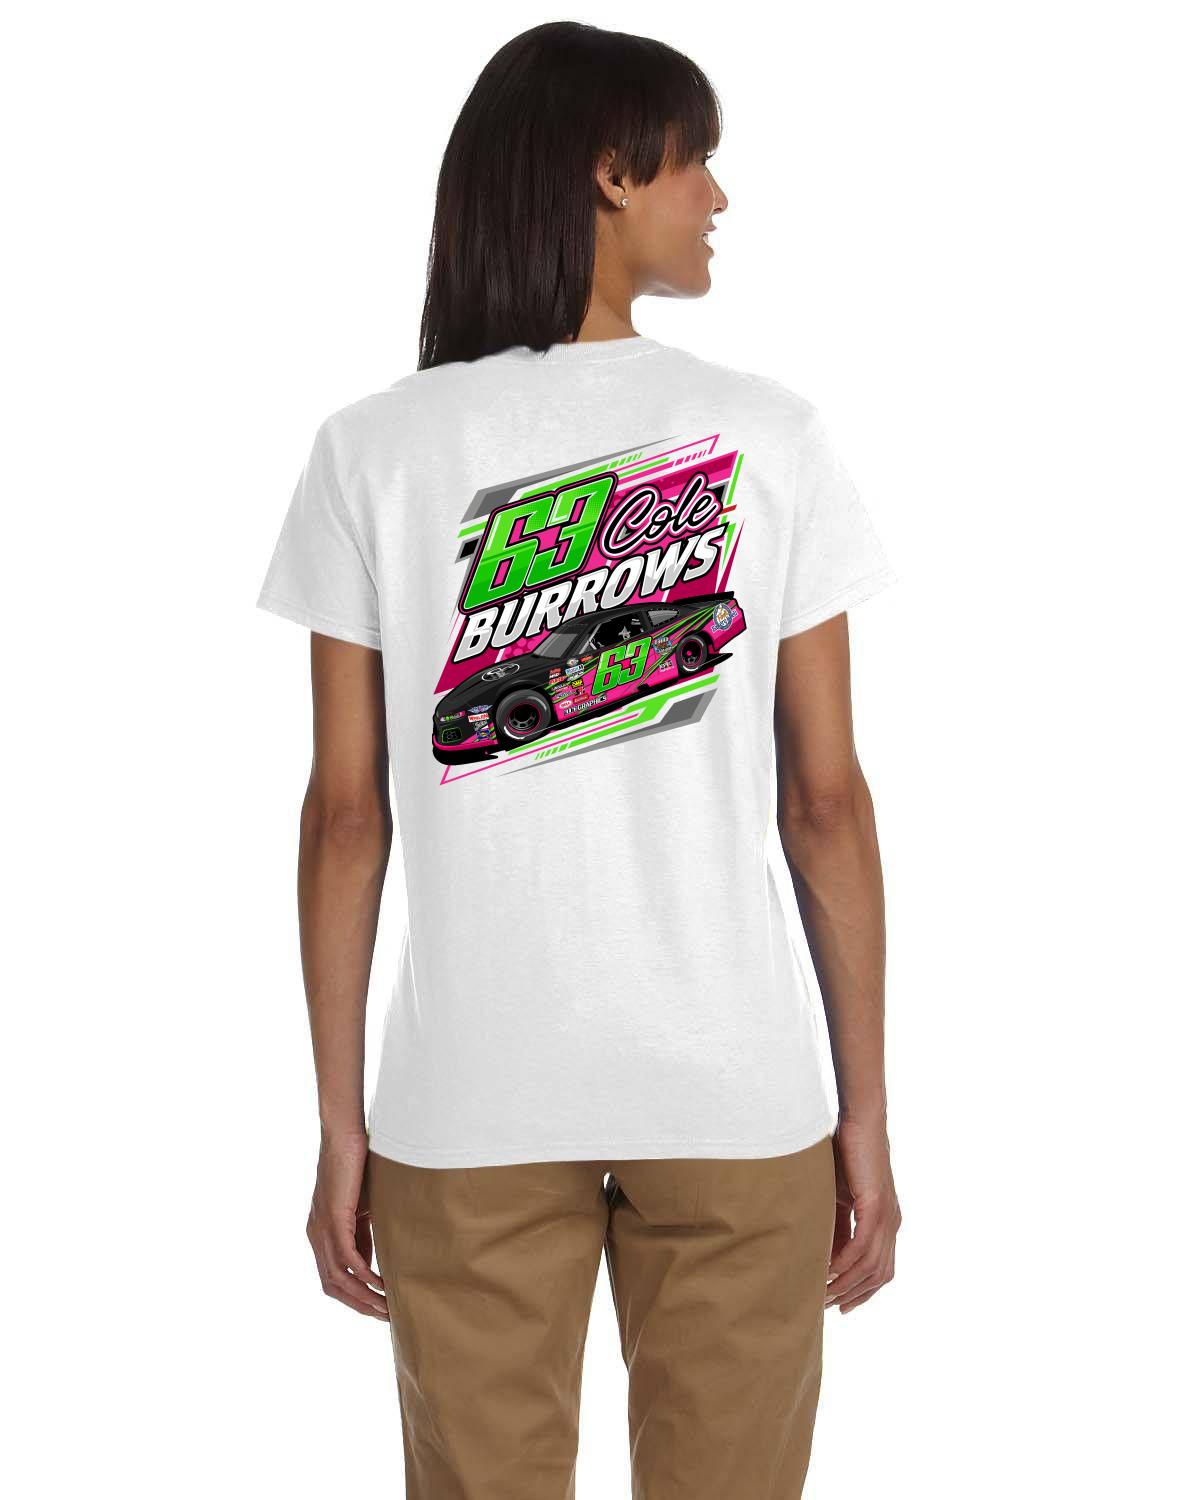 Cole Burrows Racing Ladies' T-Shirt